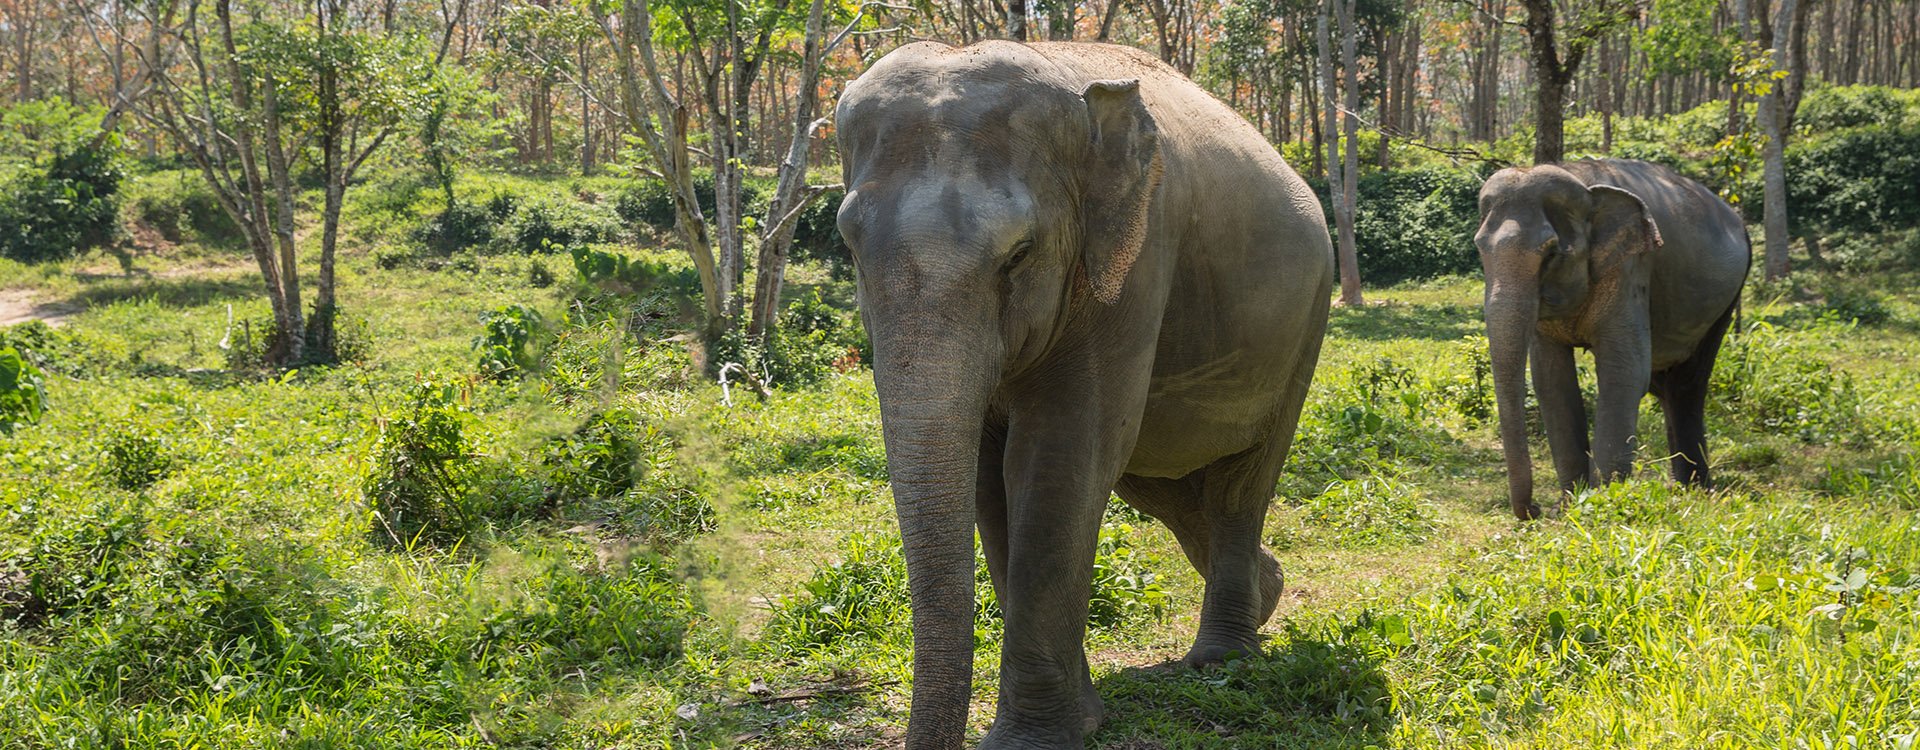 Elephant enjoying retirement in a rescue sanctuary forest, Khao Lak, Thailand